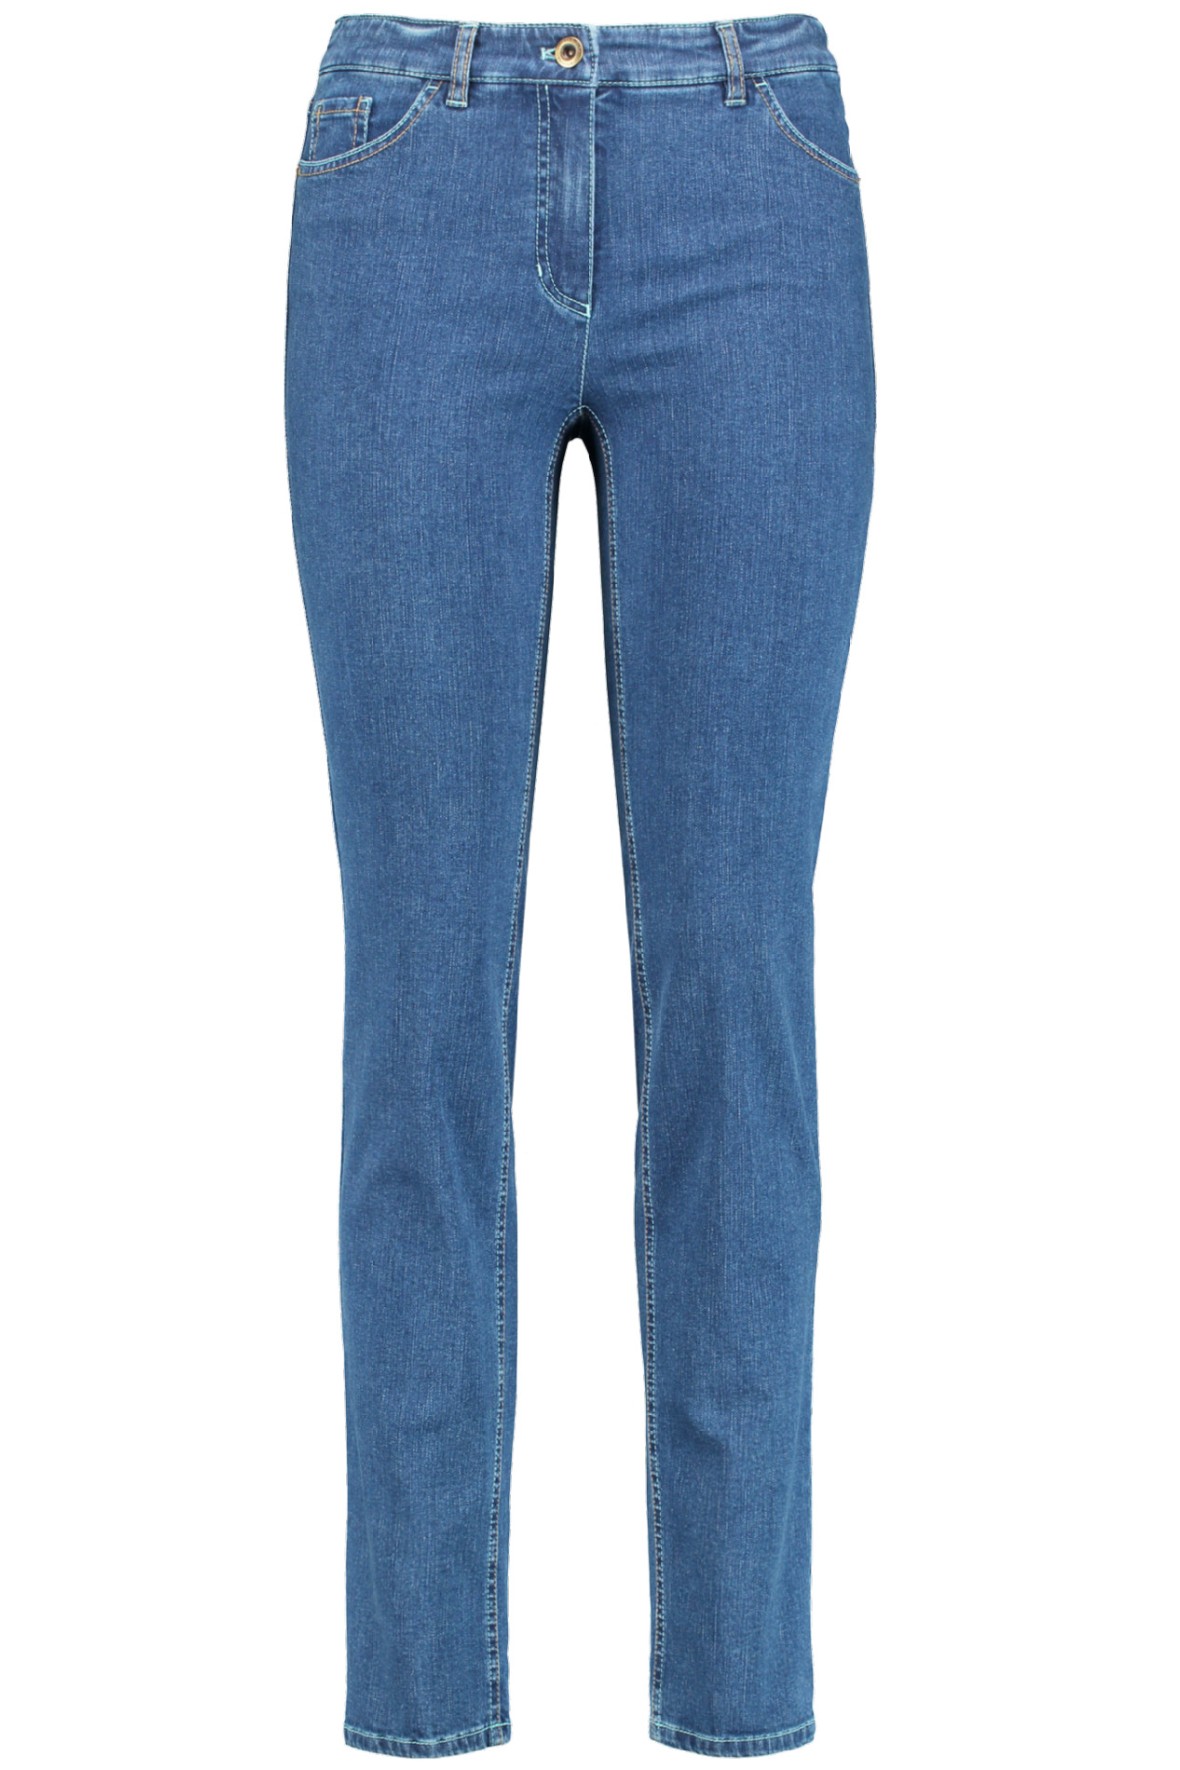 Weber edition jeans straight fit regular medium blå - - Hos Lohse